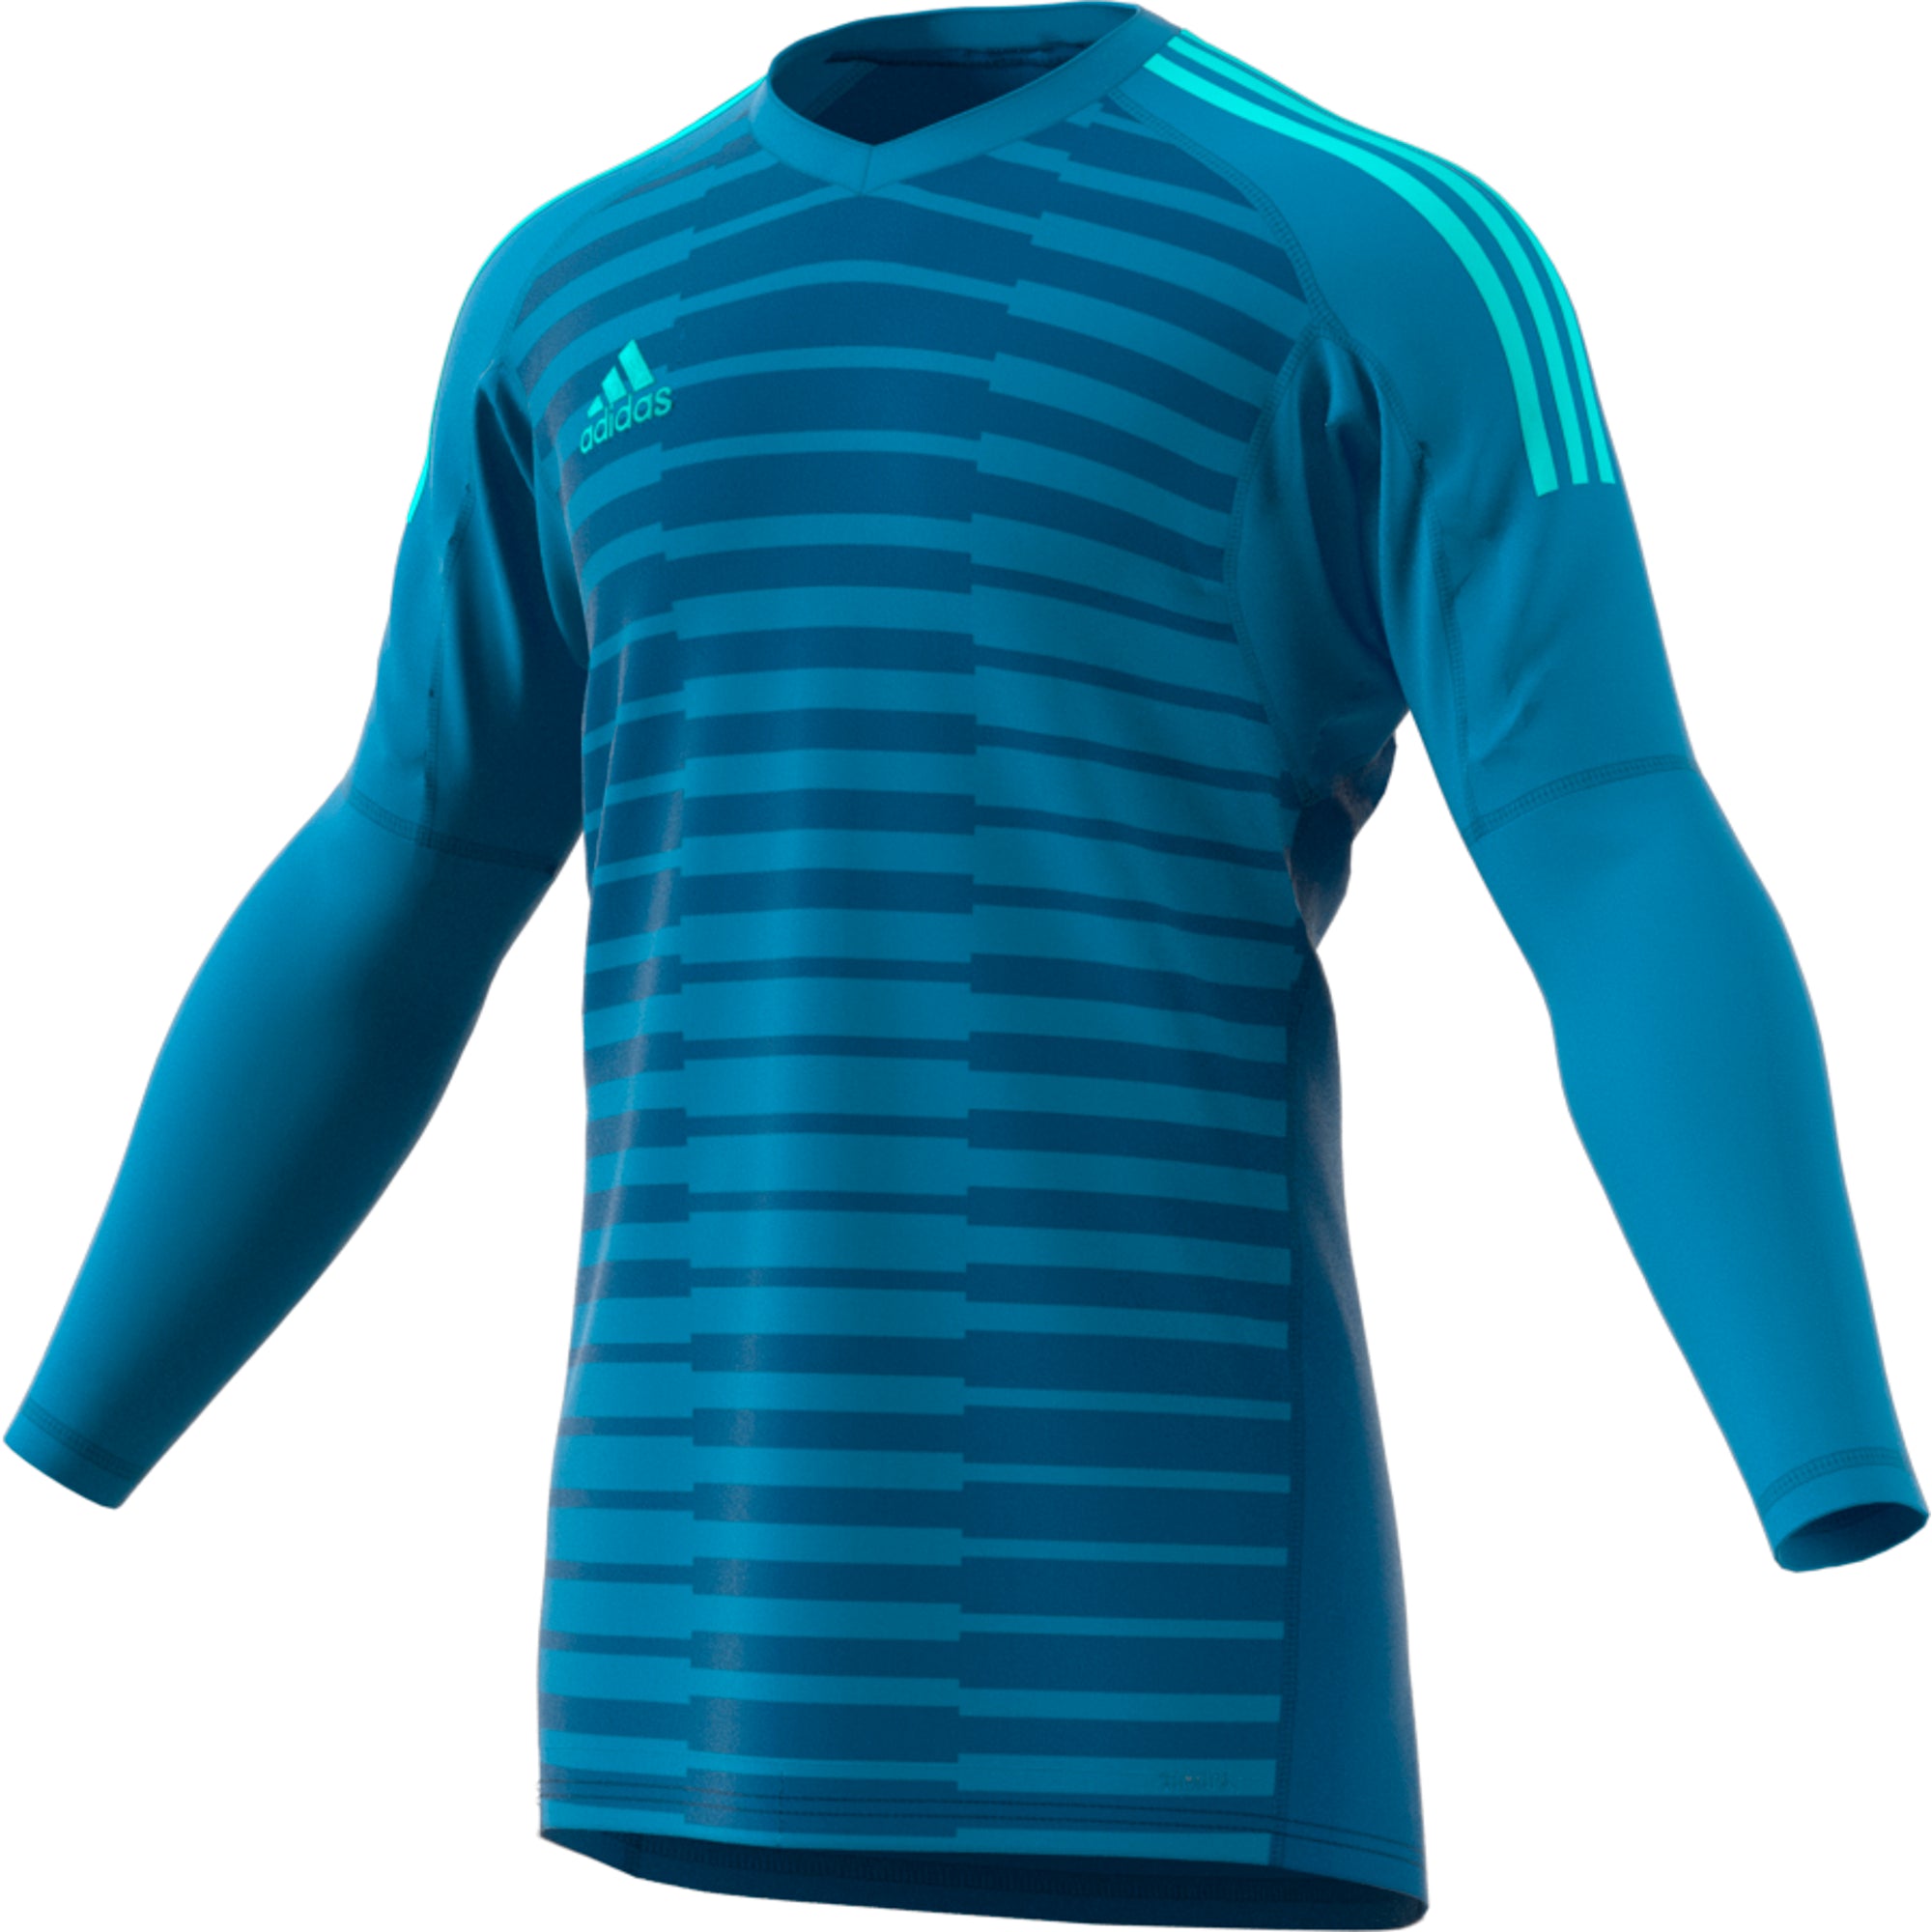 Verter frecuencia apaciguar Adidas Adipro 18 Goalkeeping Shirt – Customkit.com